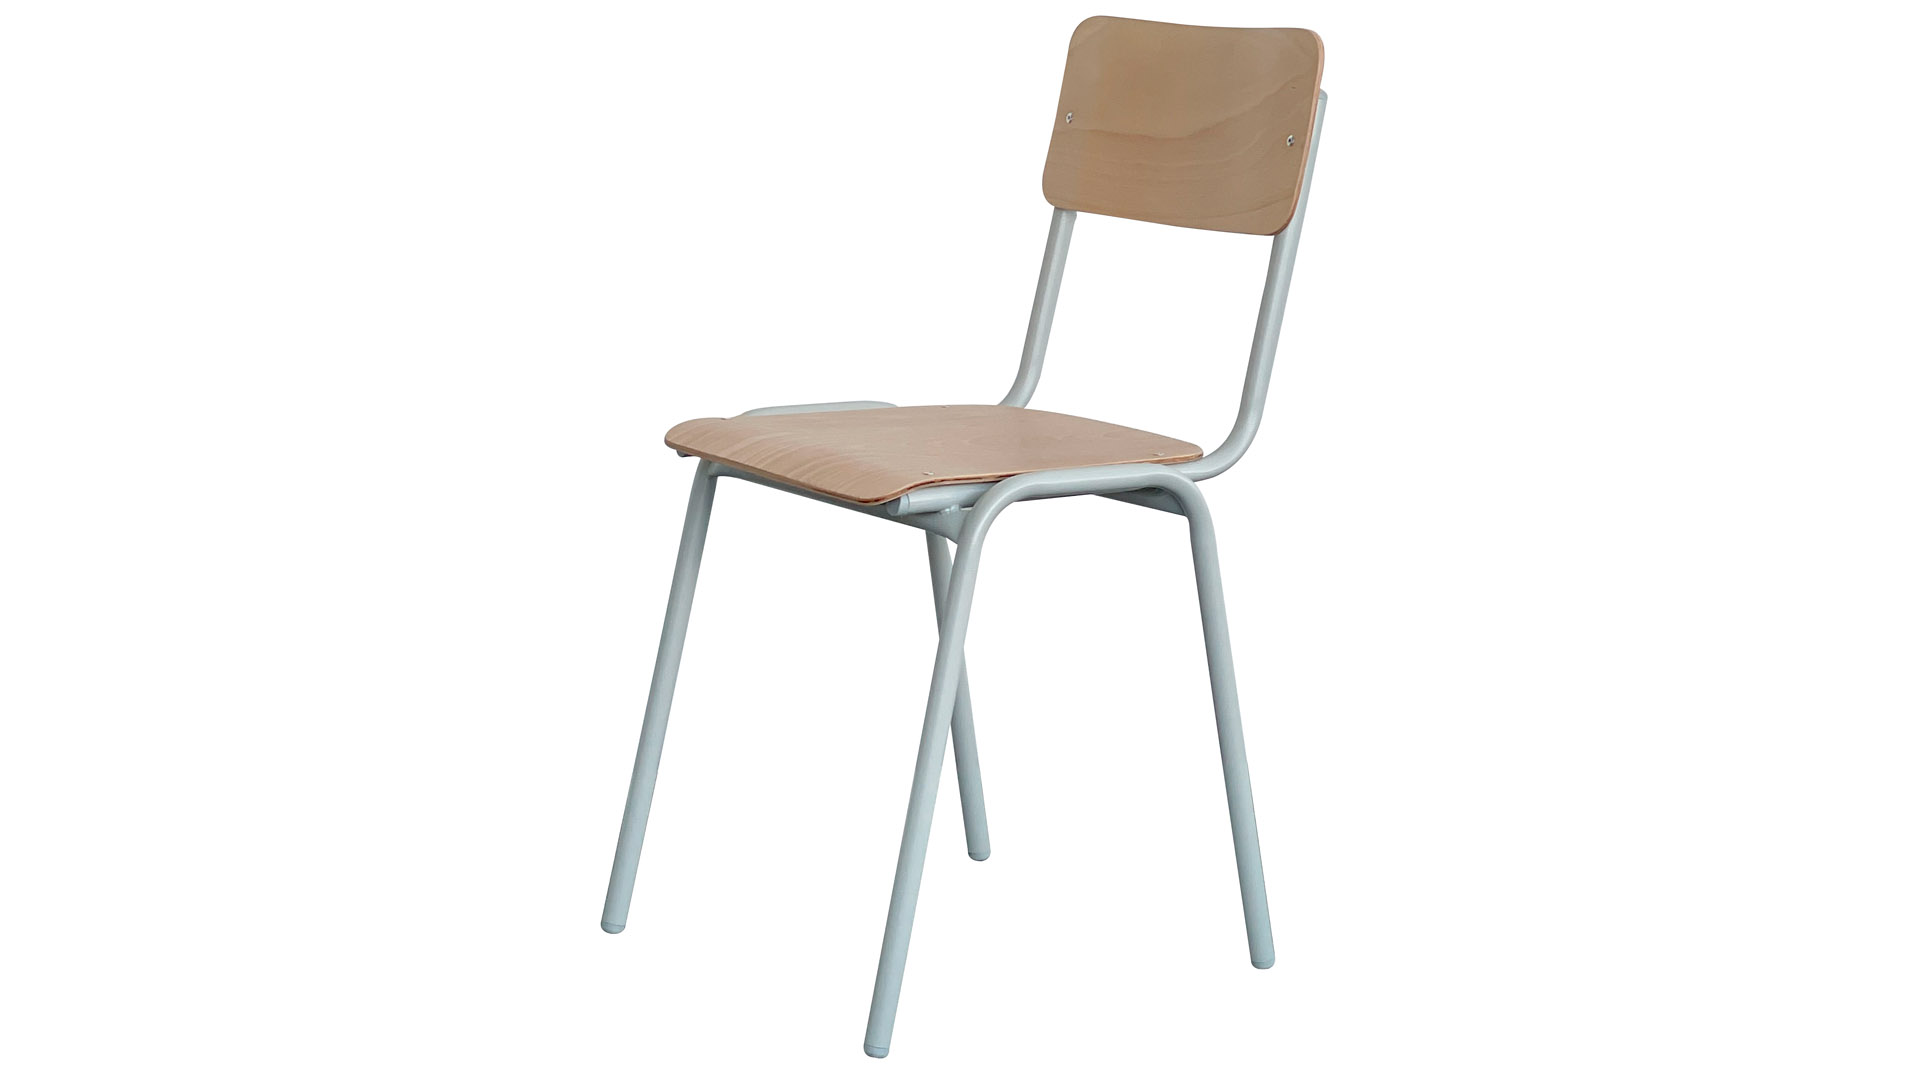 Stapelstuhl, Sitz und Rücken Buchensperrholz, naturlackiert, Gestell-Durchm. 20 mm, lichtgrau